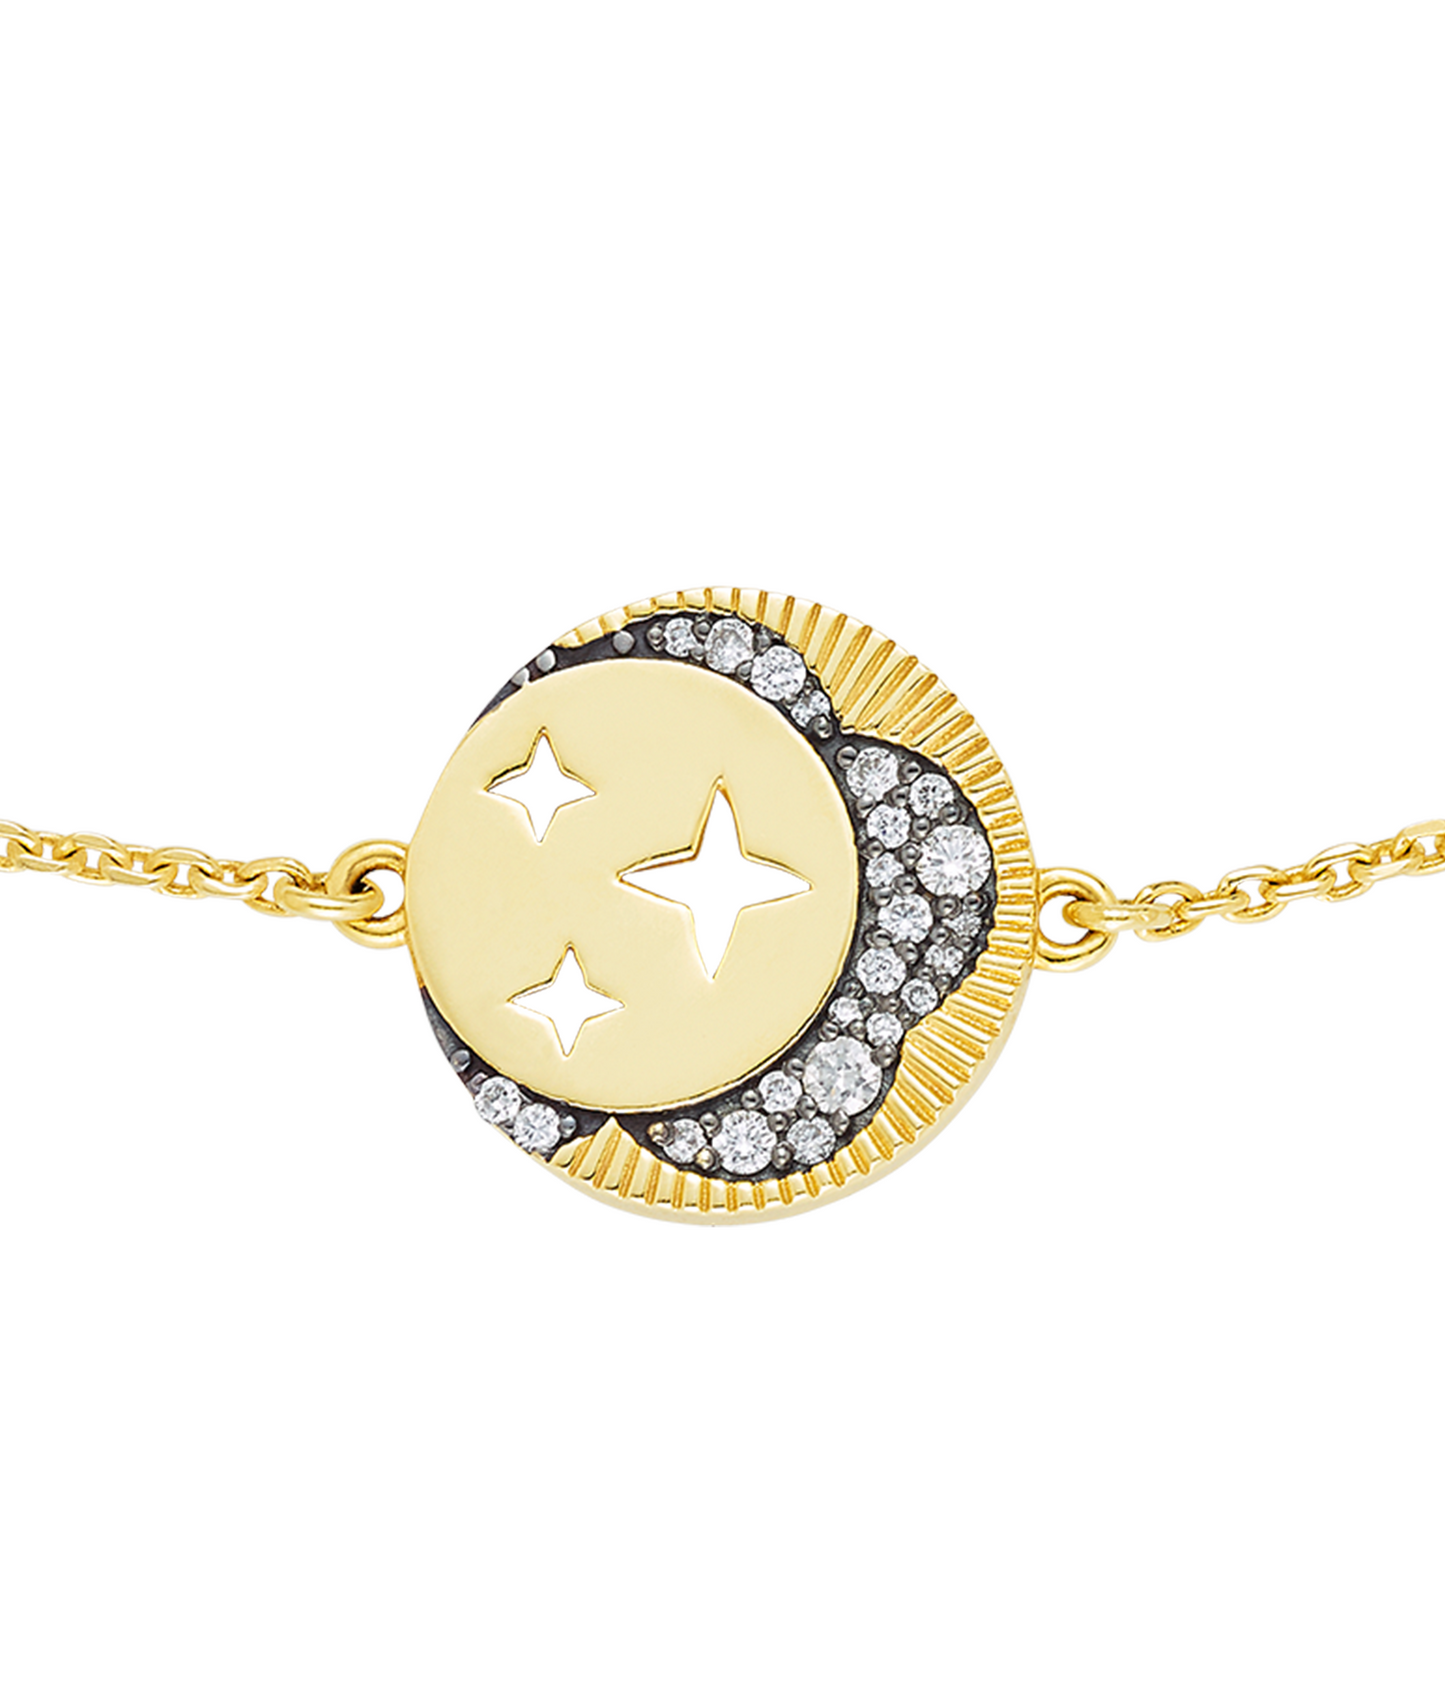 'Look Up At The Moon' Bracelet Diamond